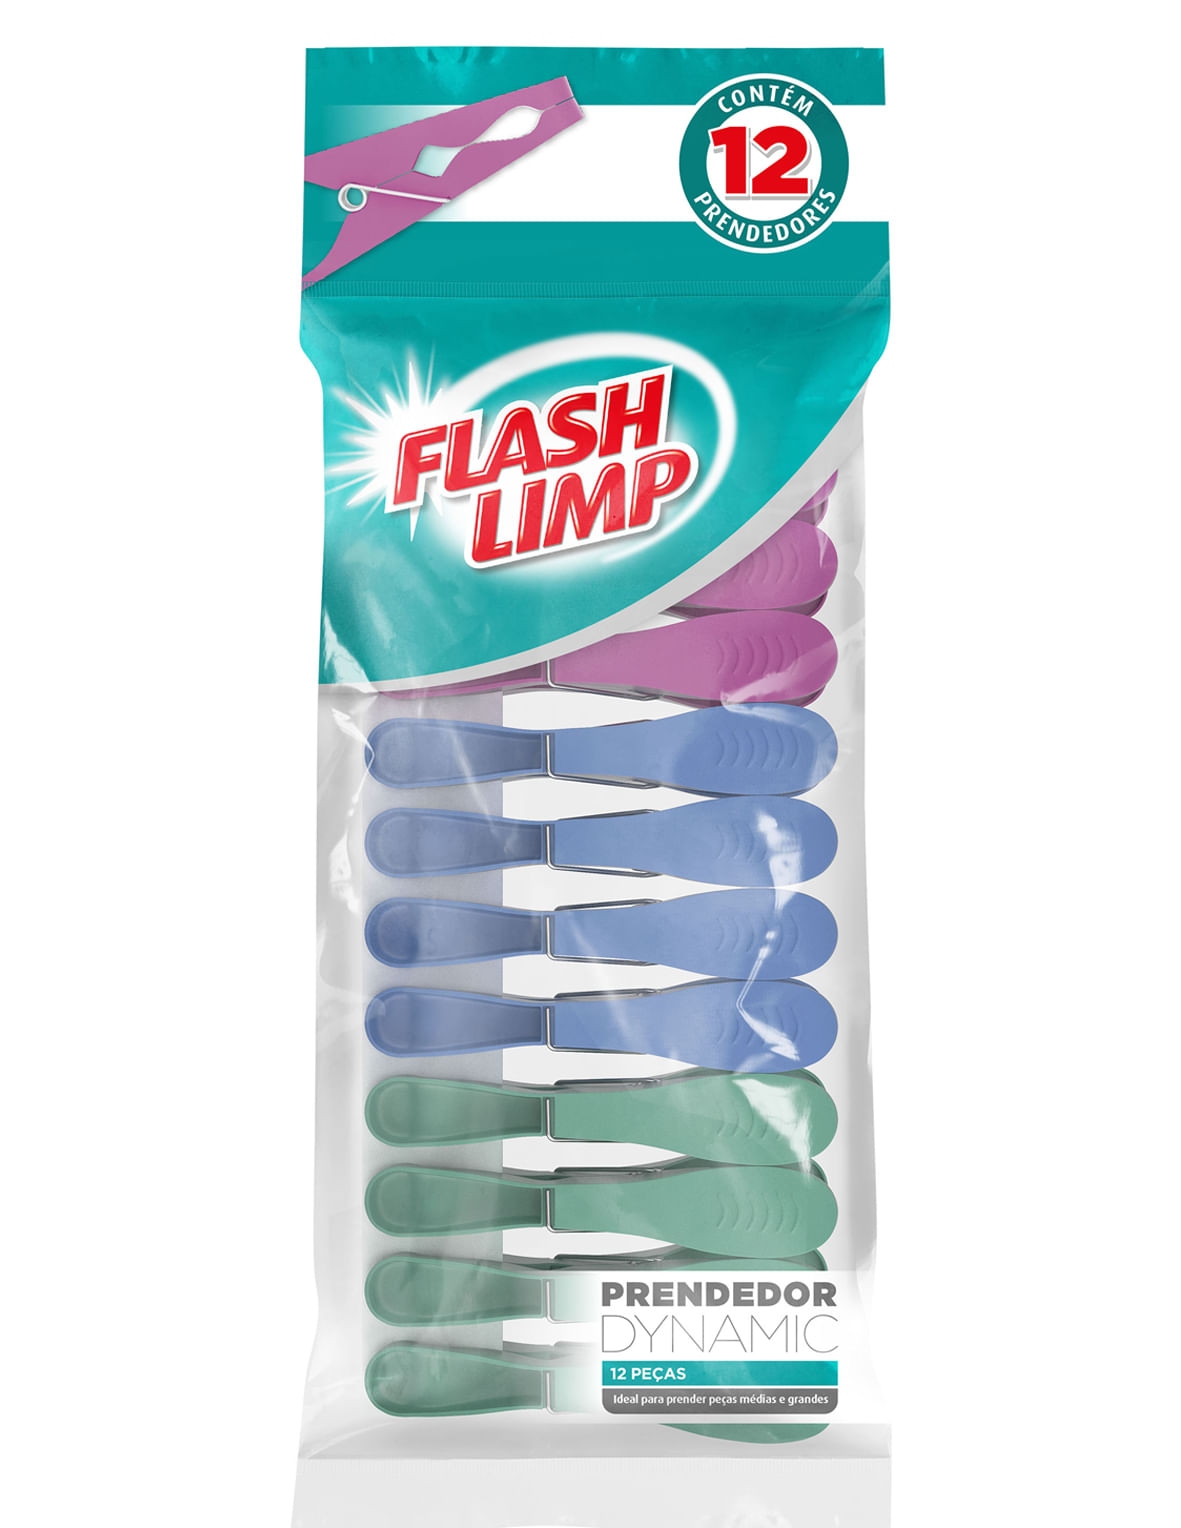 Conjunto 12 Prendedores Dynamic Flash Limp